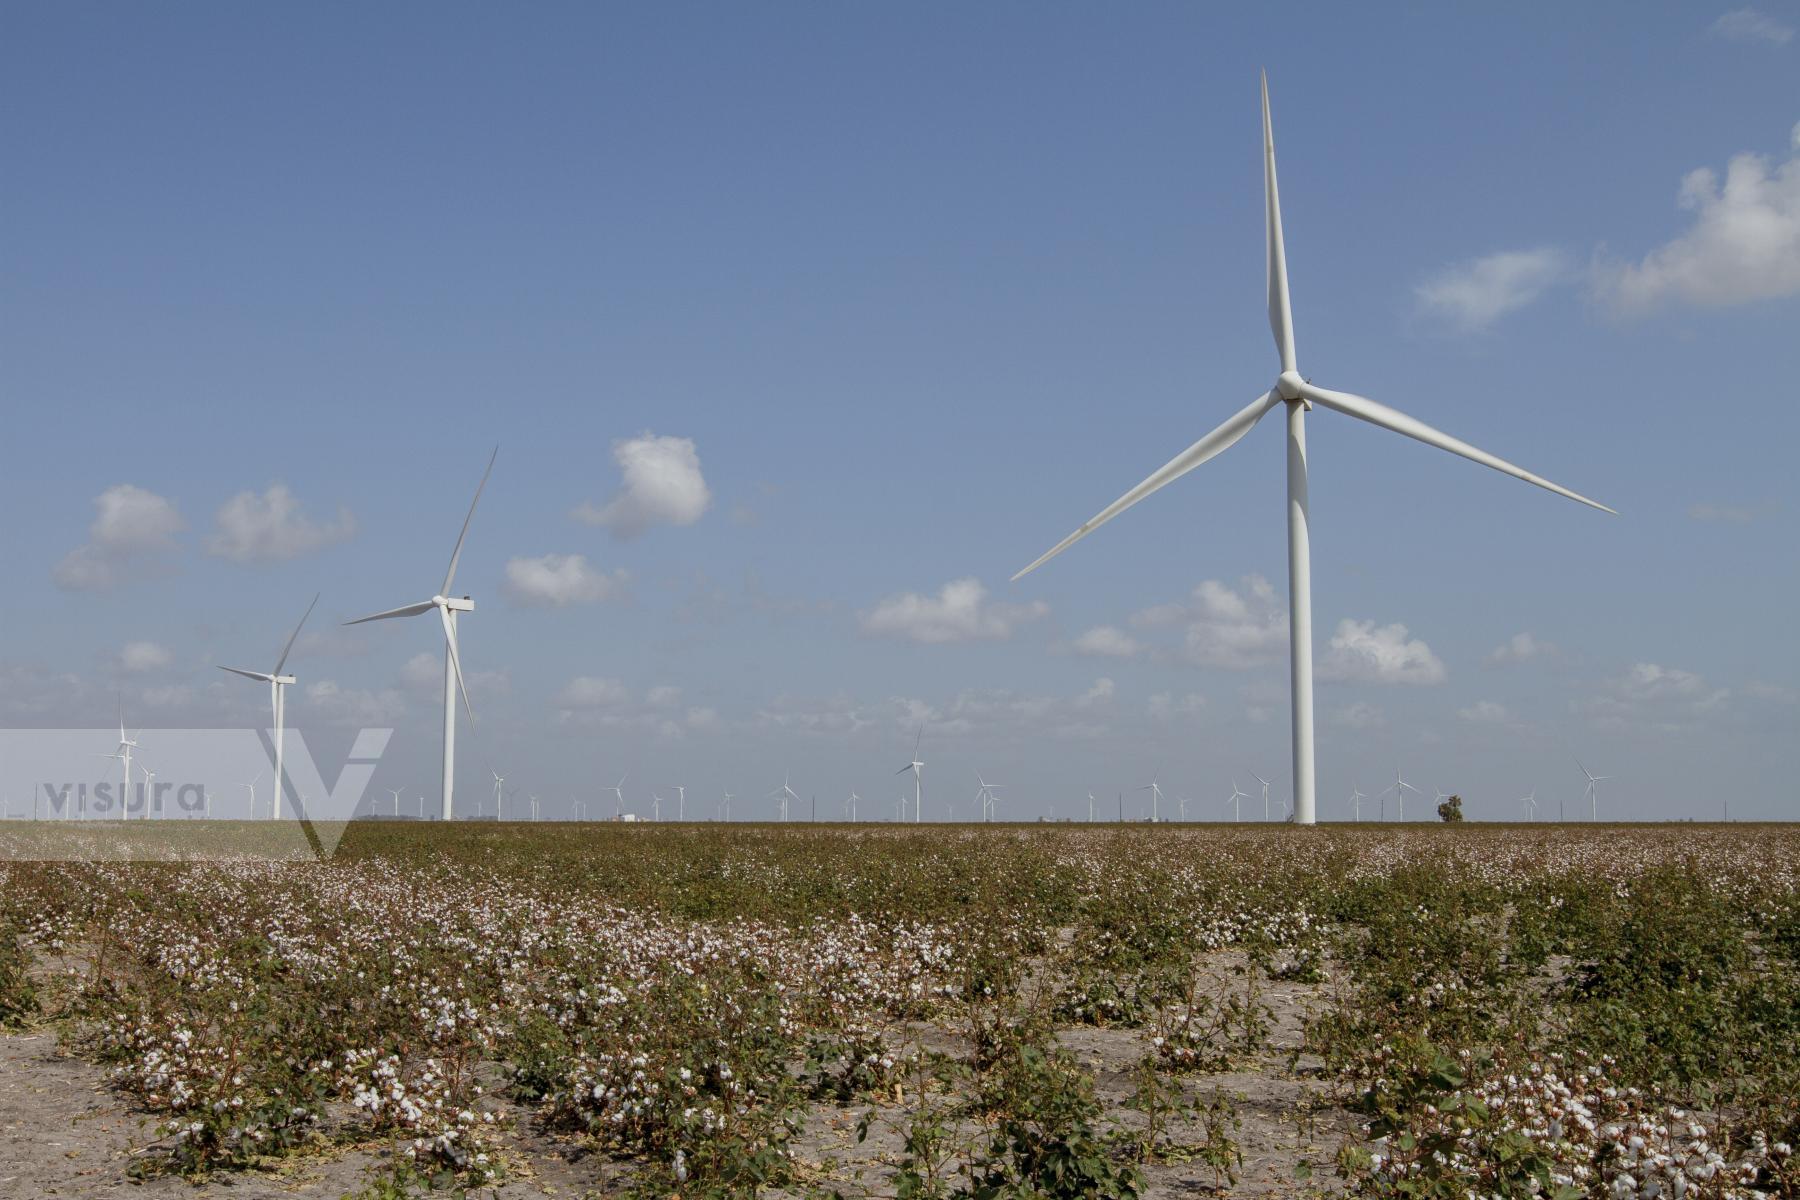 Purchase Coastal South Texas Wind Turbines by Jaime R. Carrero